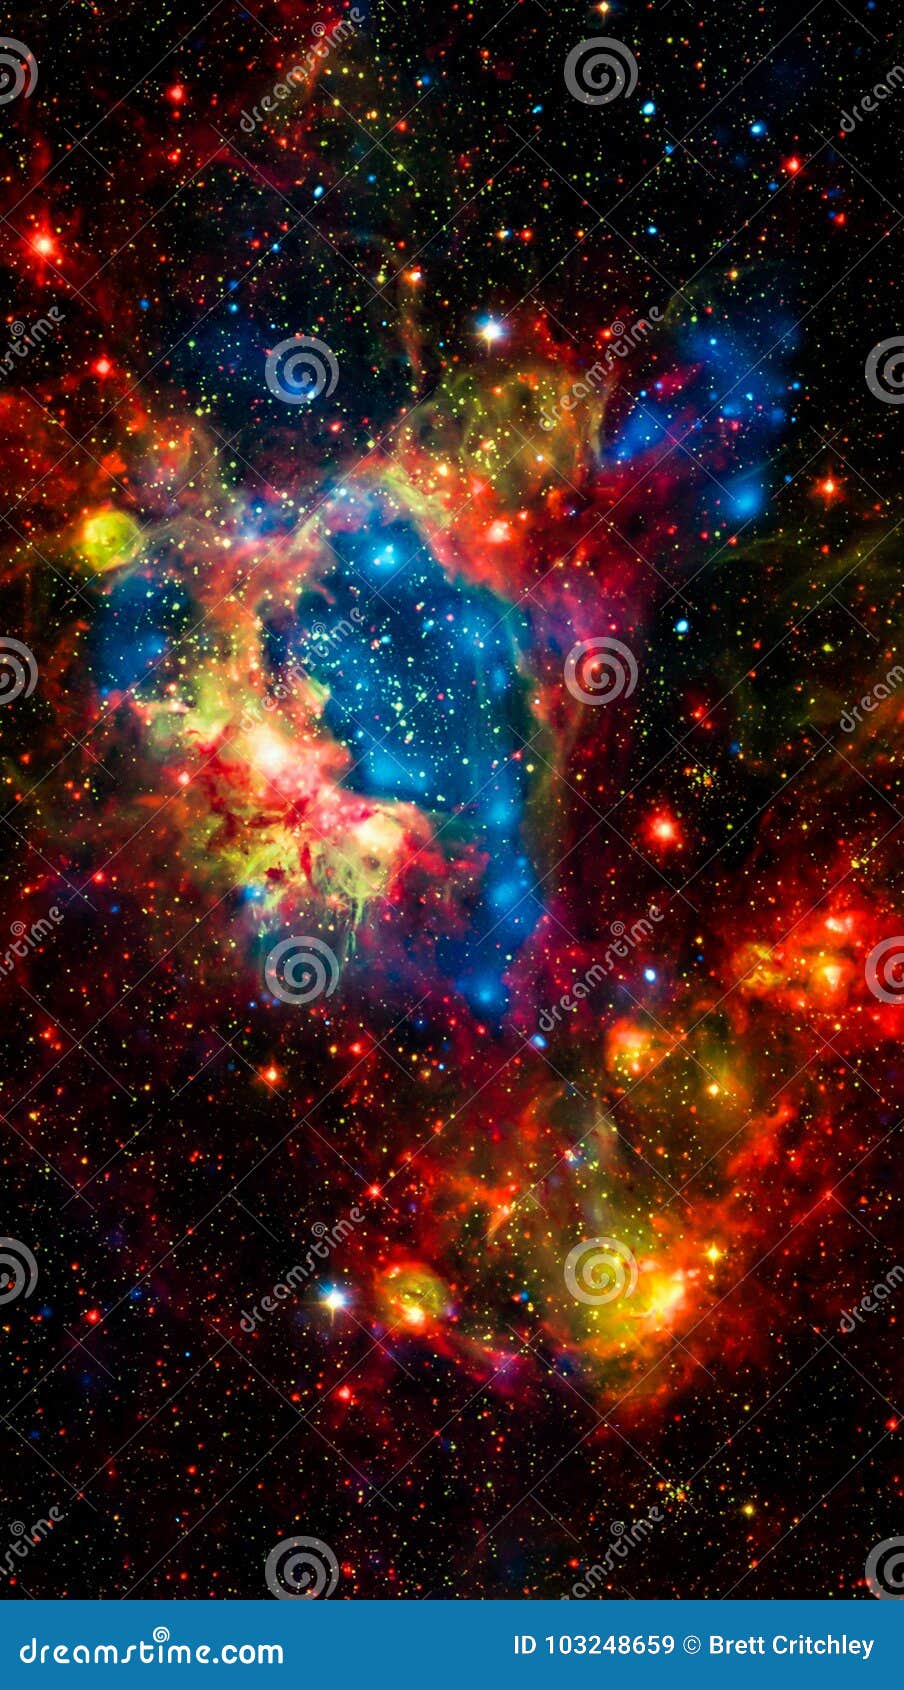 1135 Galaxy Space Wallpaper Hd Images Stock Photos  Vectors   Shutterstock